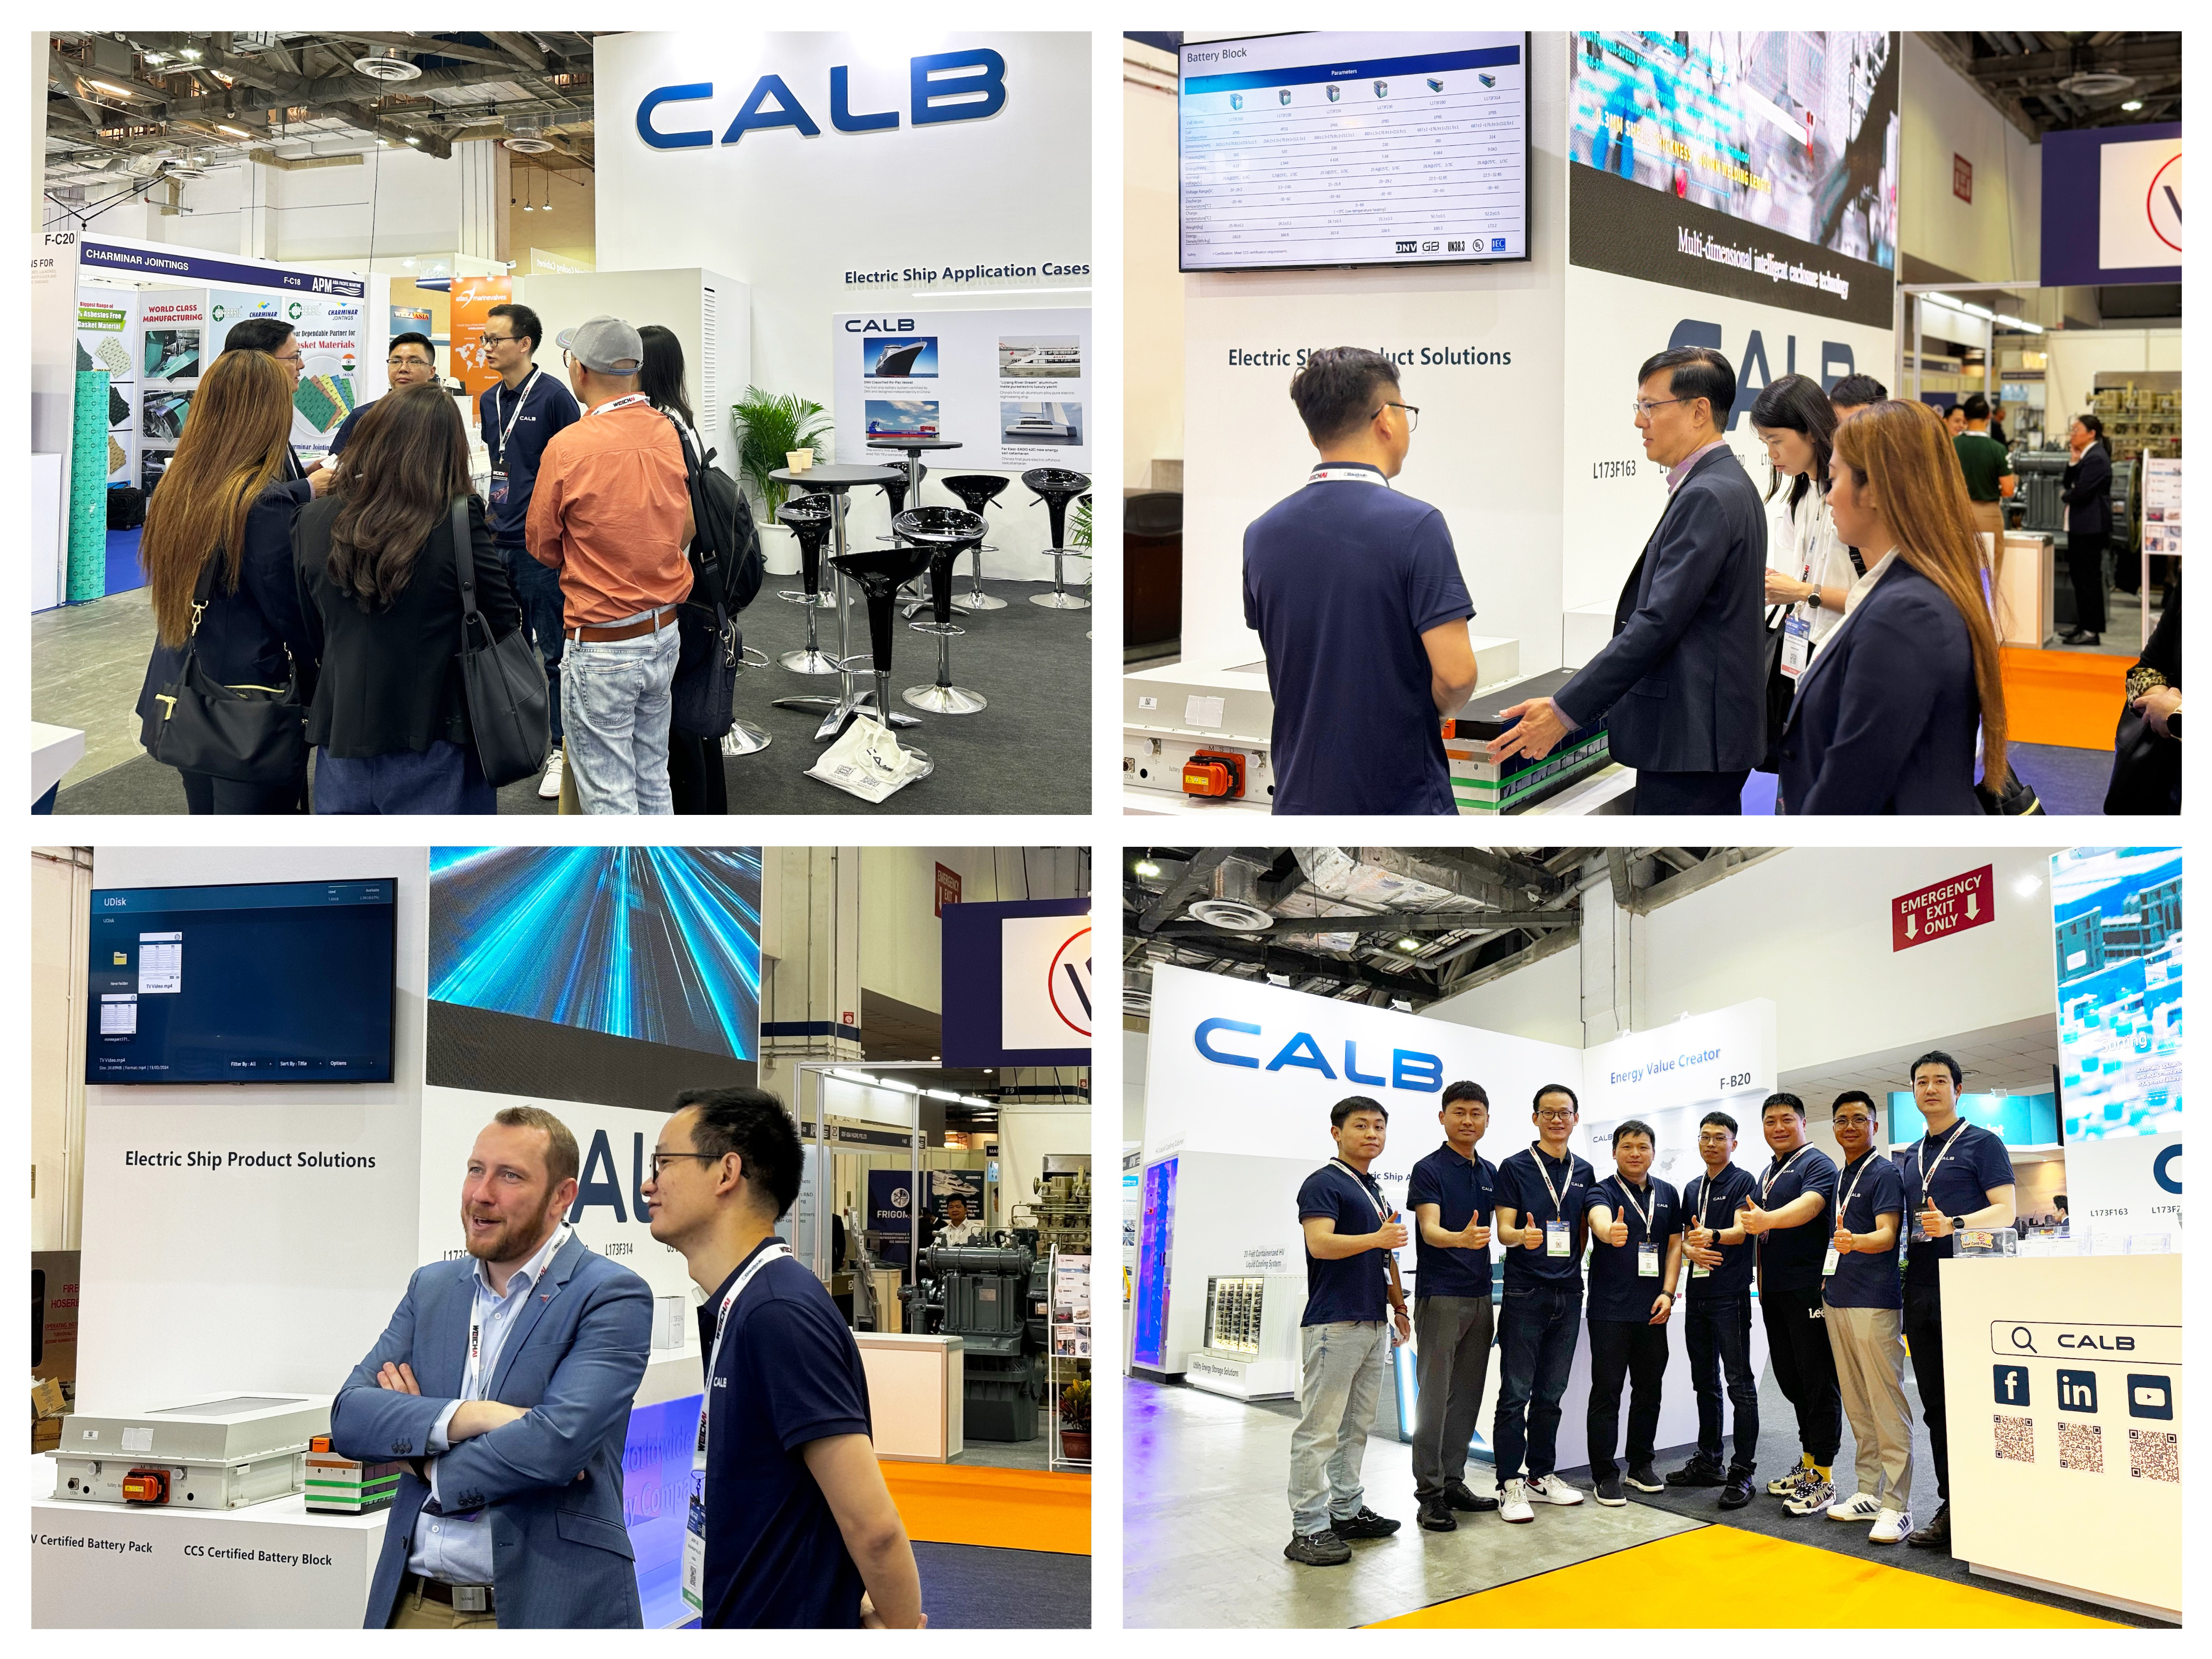 CALB Shines at the Singapore Asia Pacific Maritime Exhibition as It Navigates Towards a Low-Carbon Economic Blue Ocean